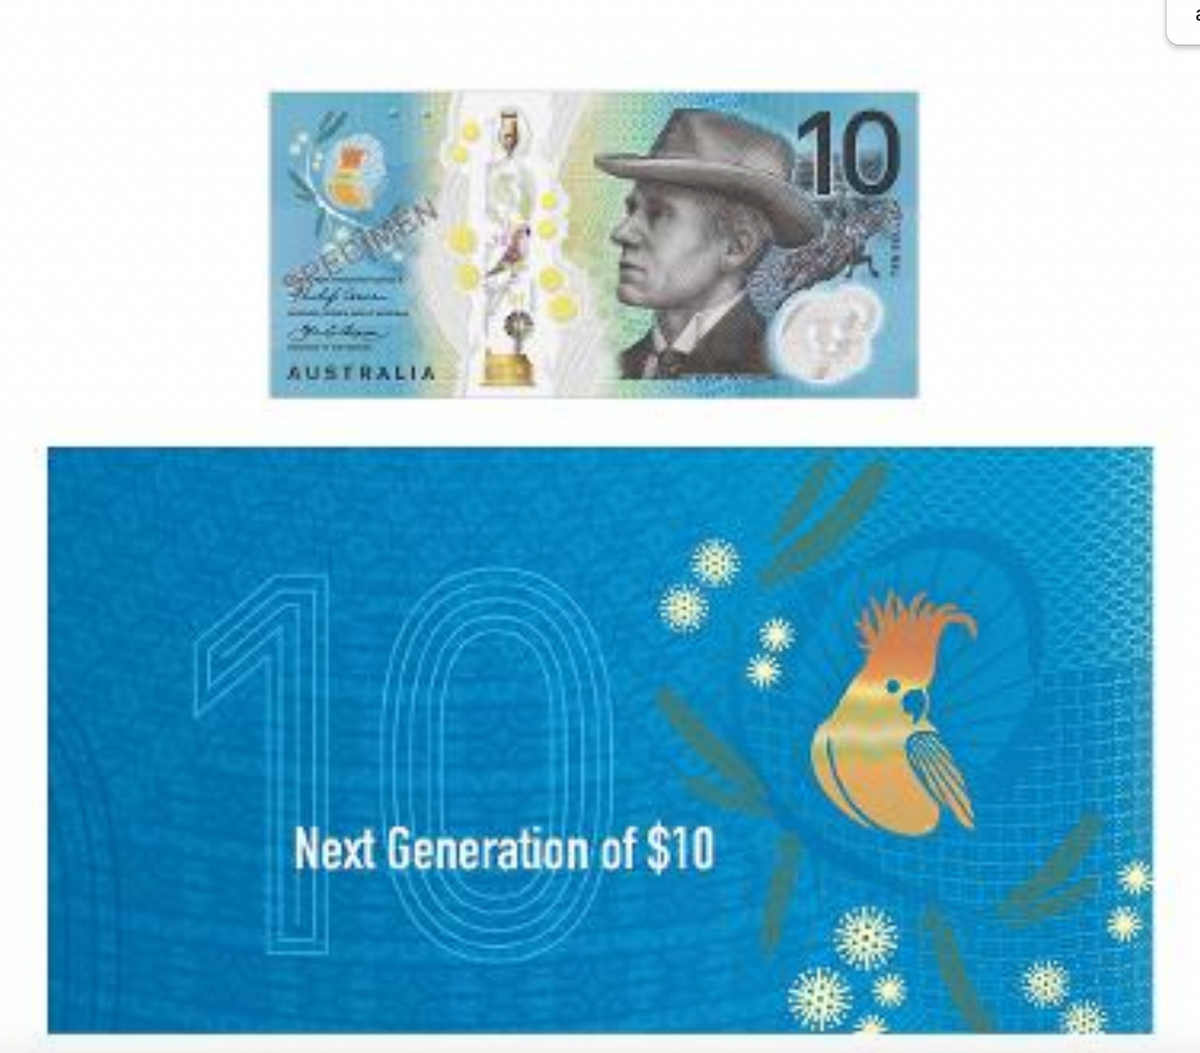 Next Generation $10 Banknote